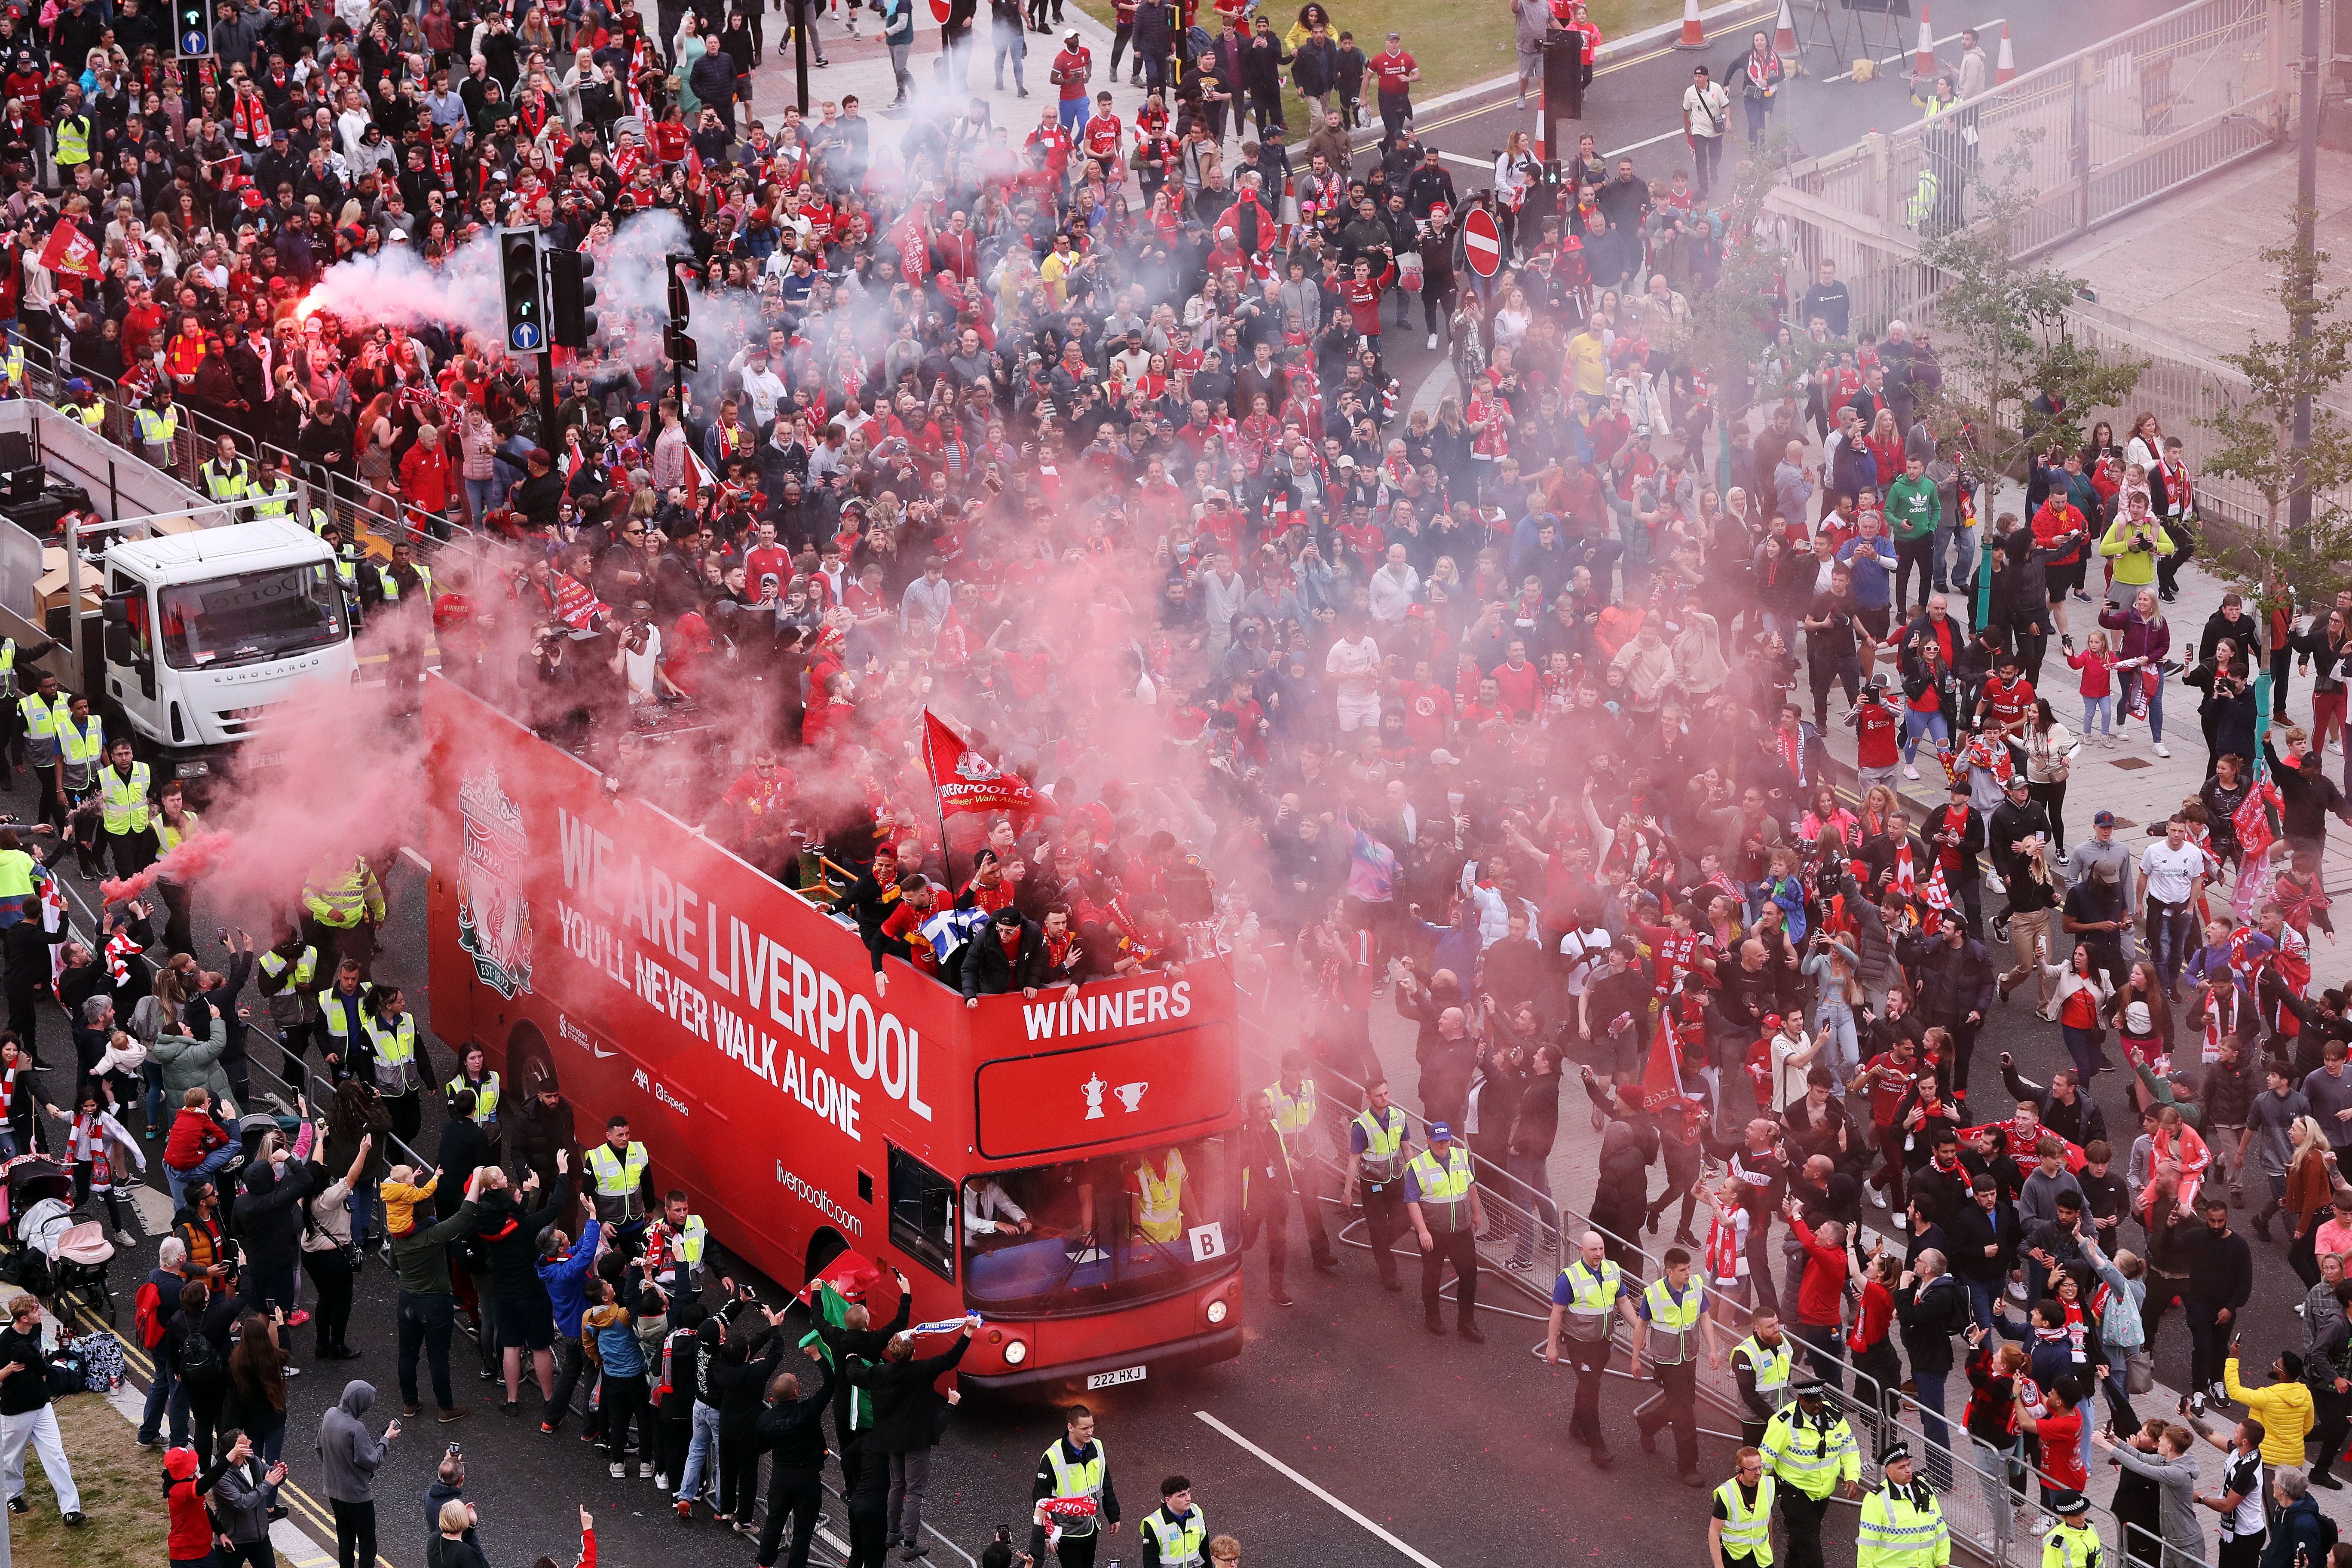 Liverpool bus parade